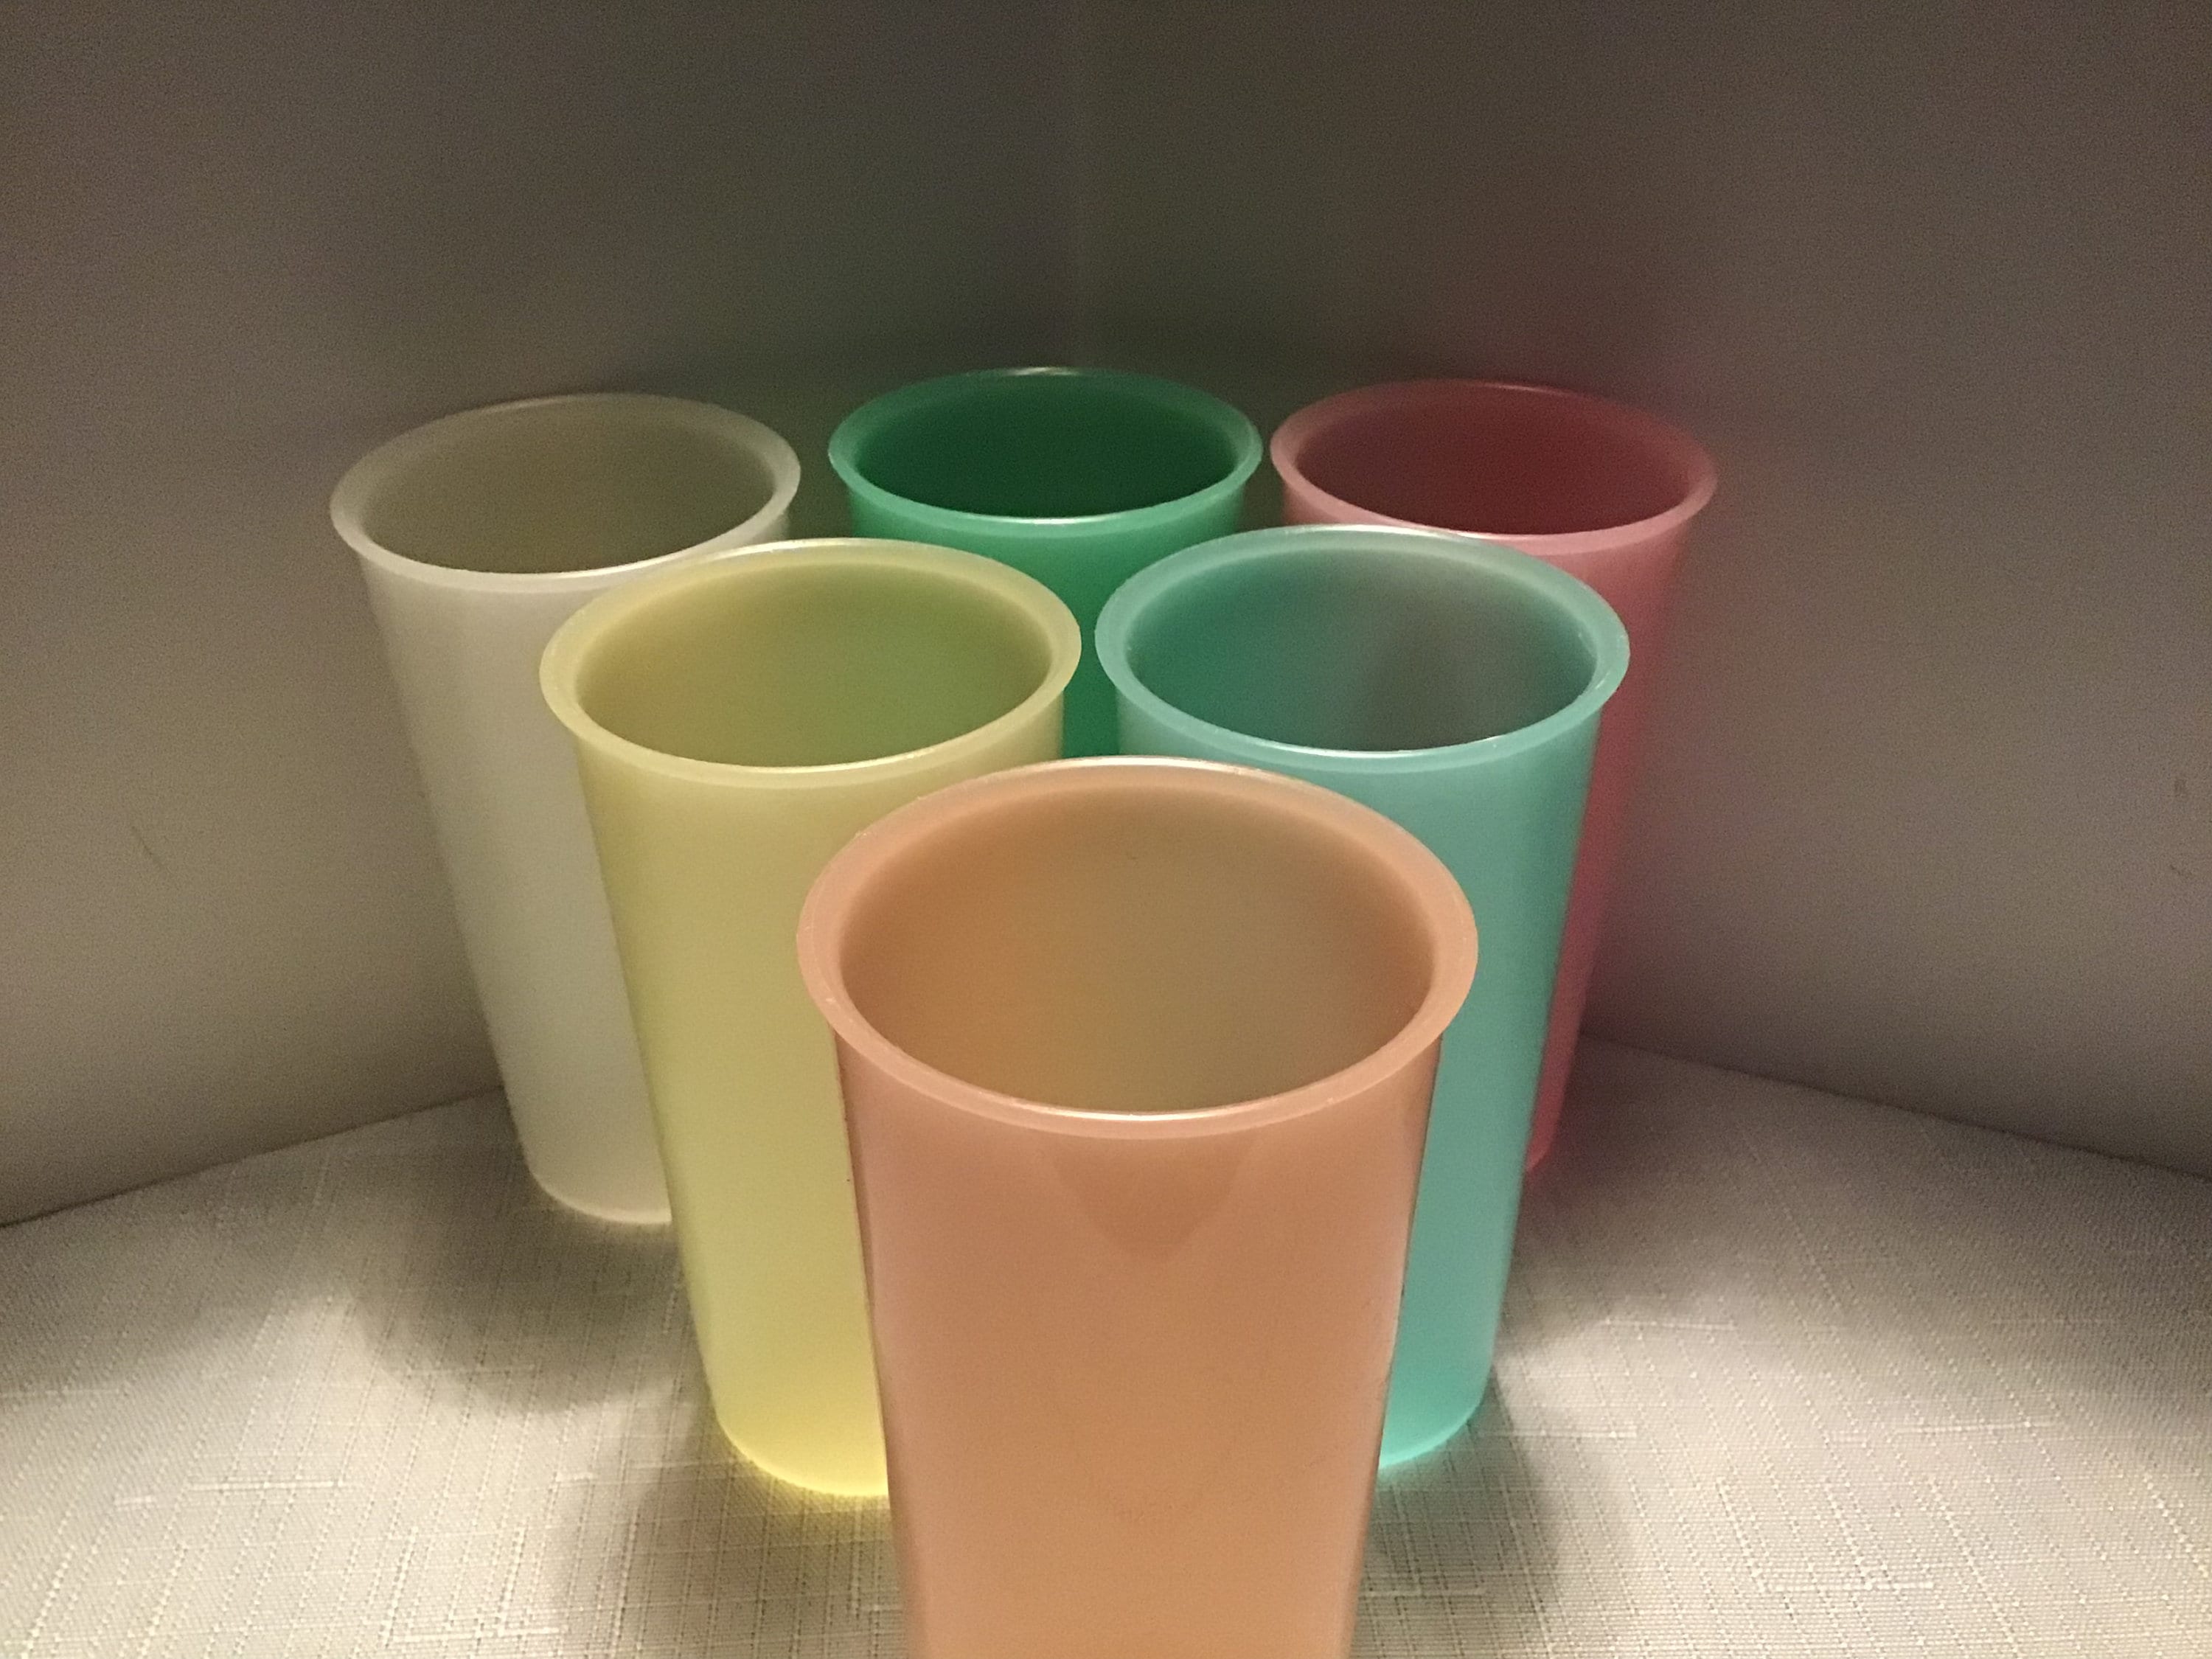 6 Tupperware 116 Tumblers Small Pastel Plastic Cups 